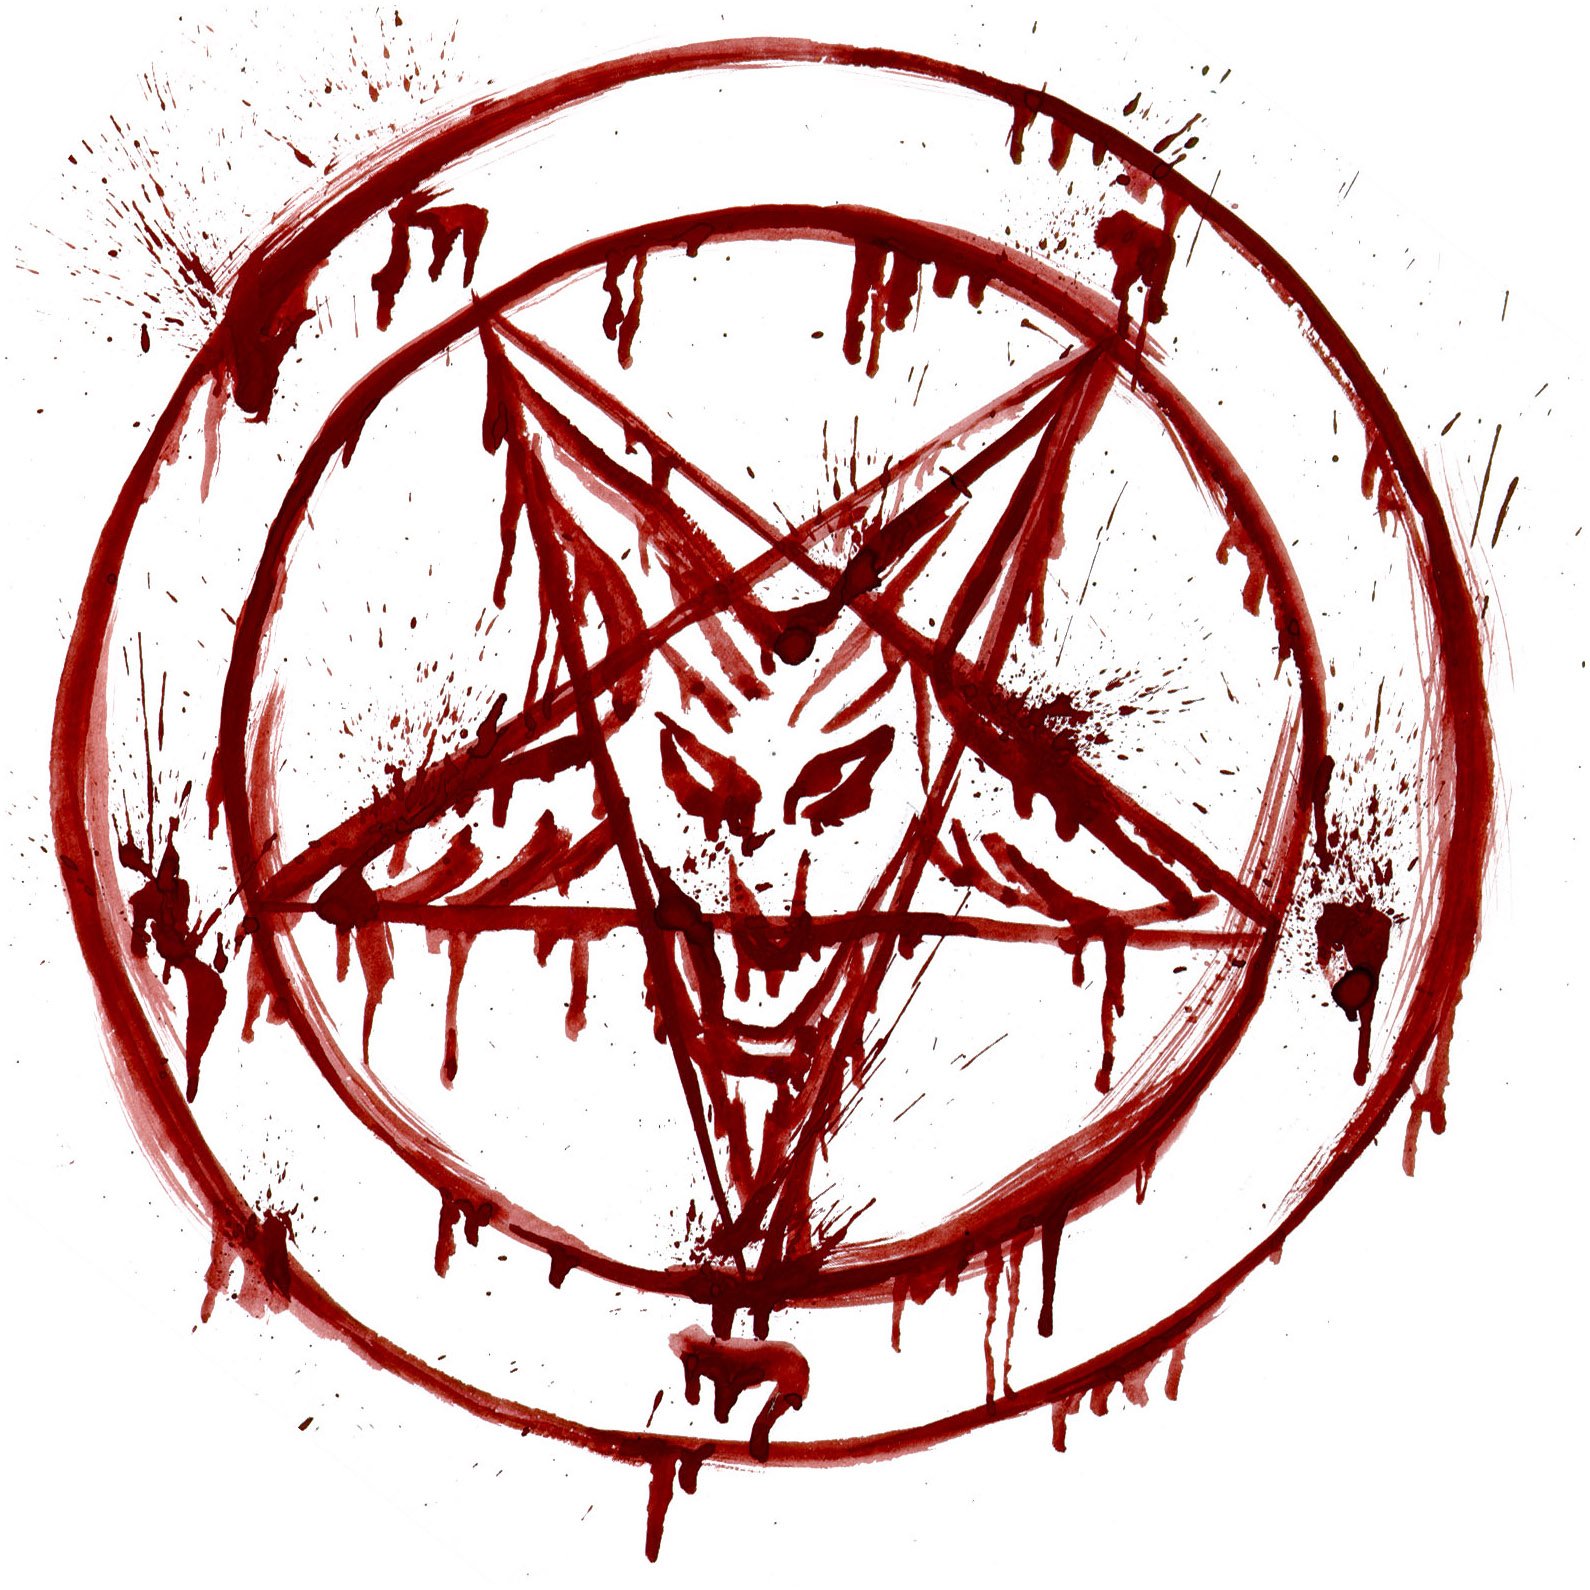 Пентаграмма сатаны символ